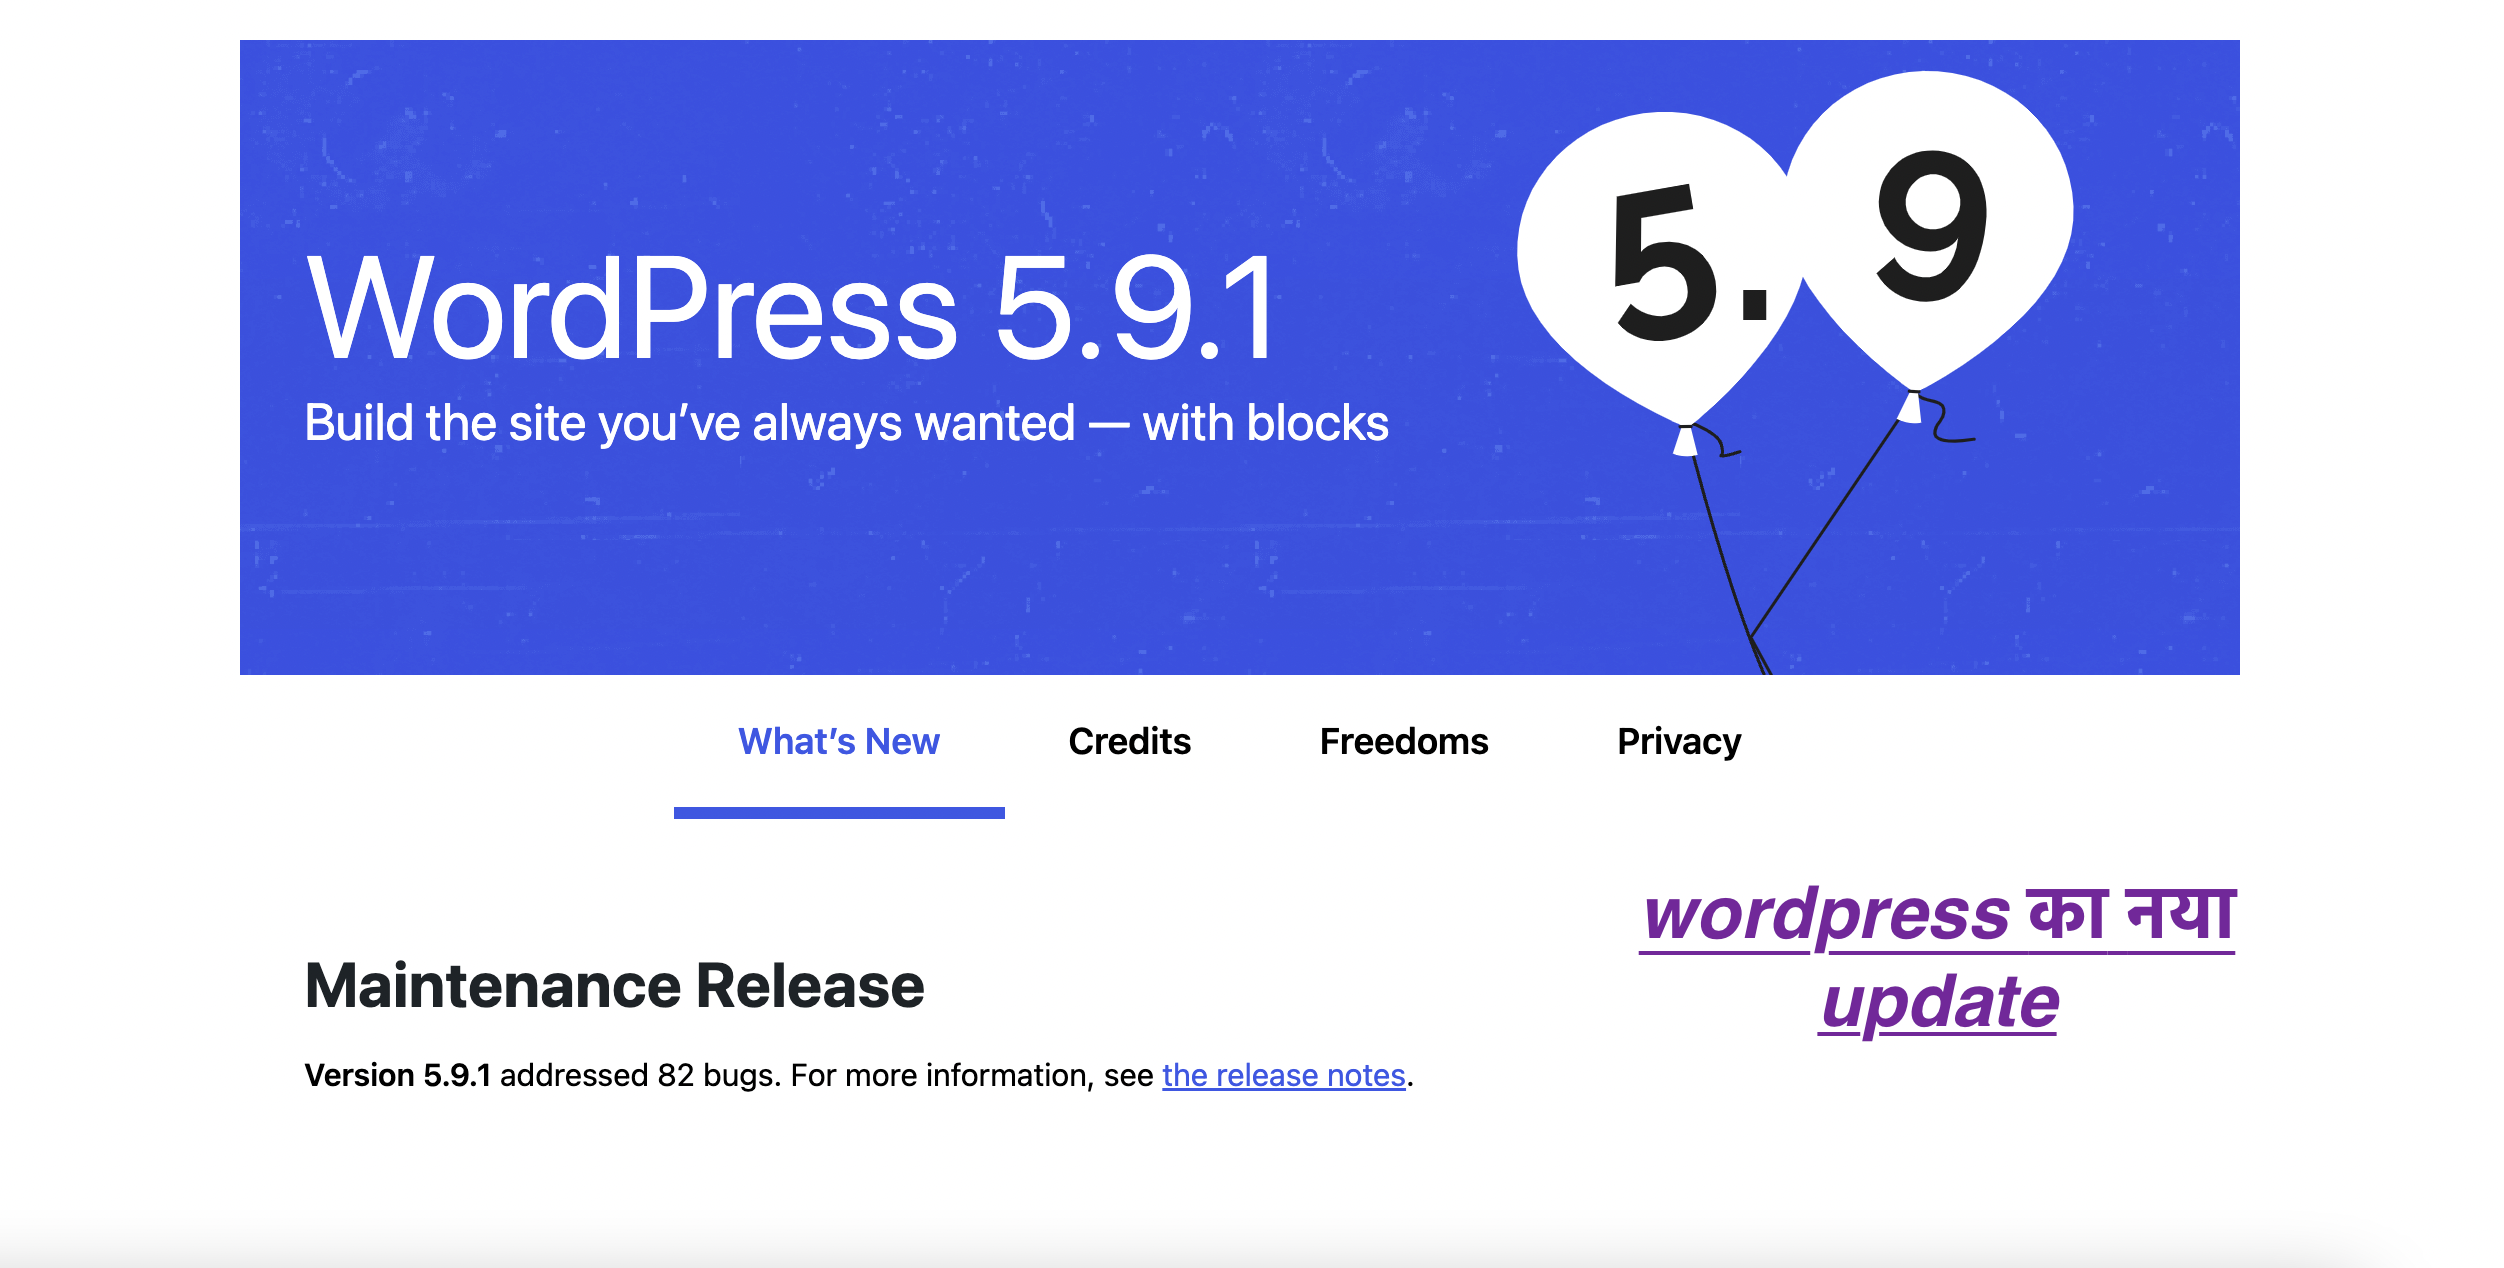 WordPress 5.9.1 update in hindi